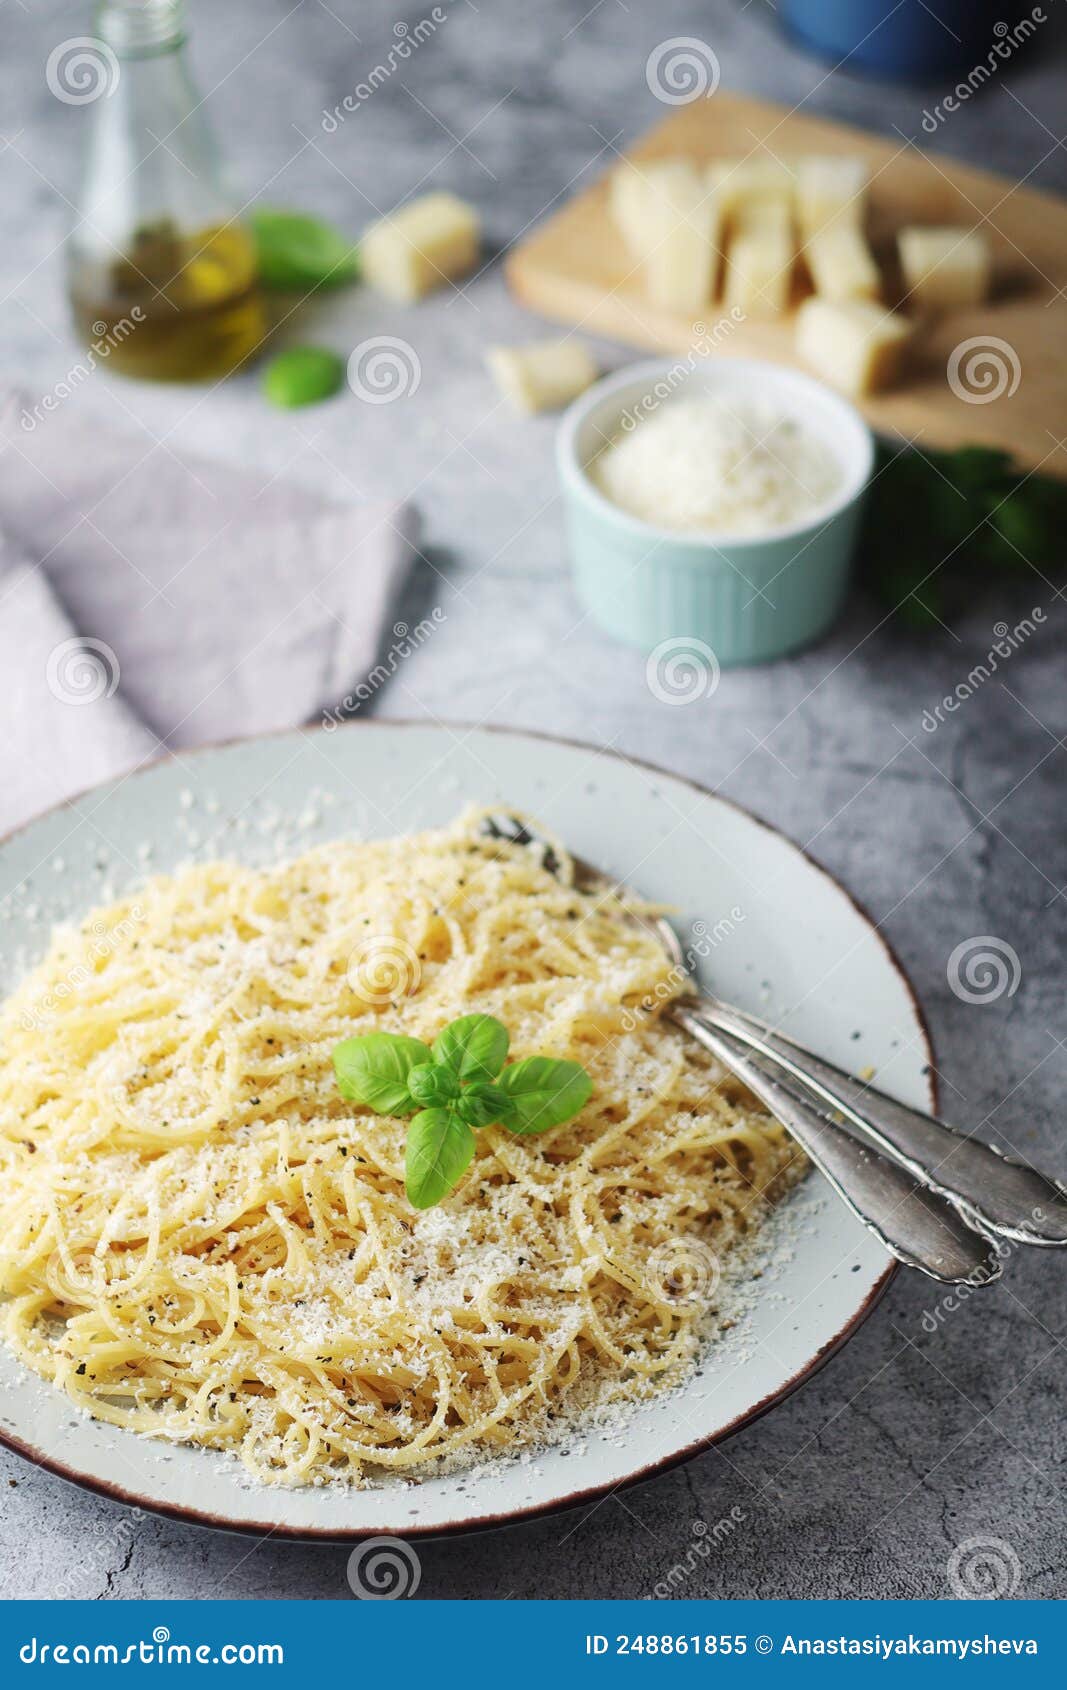 Spaghetti with Italian Cheese Pecorino Romano Stock Image - Image of ...